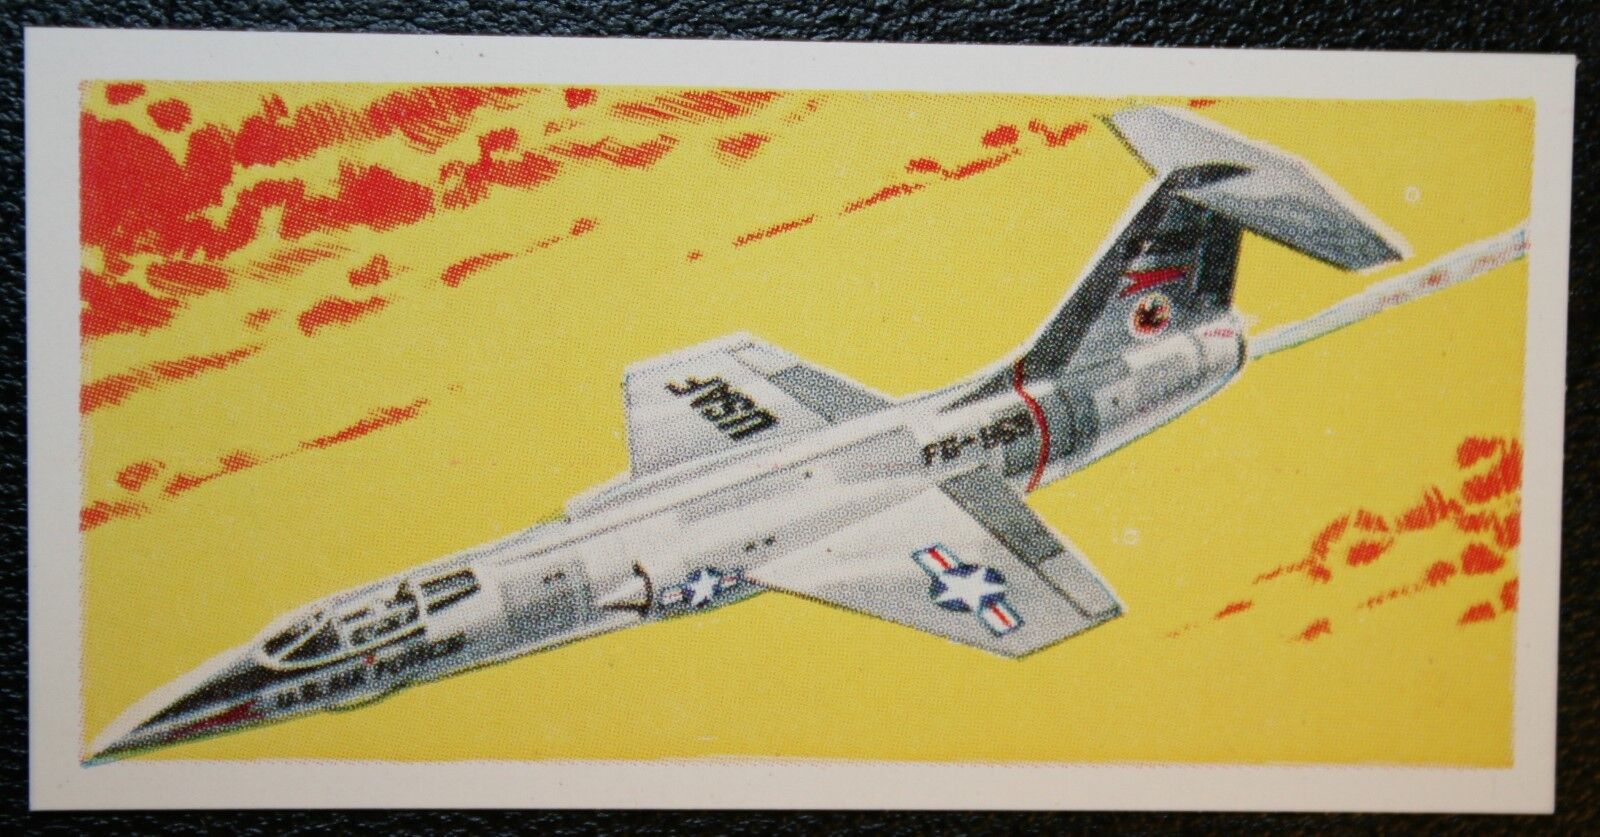 LOCKHEED F-104A STARFIGHTER  Jet Fighter   Original 1960's Vintage Card  LB15M